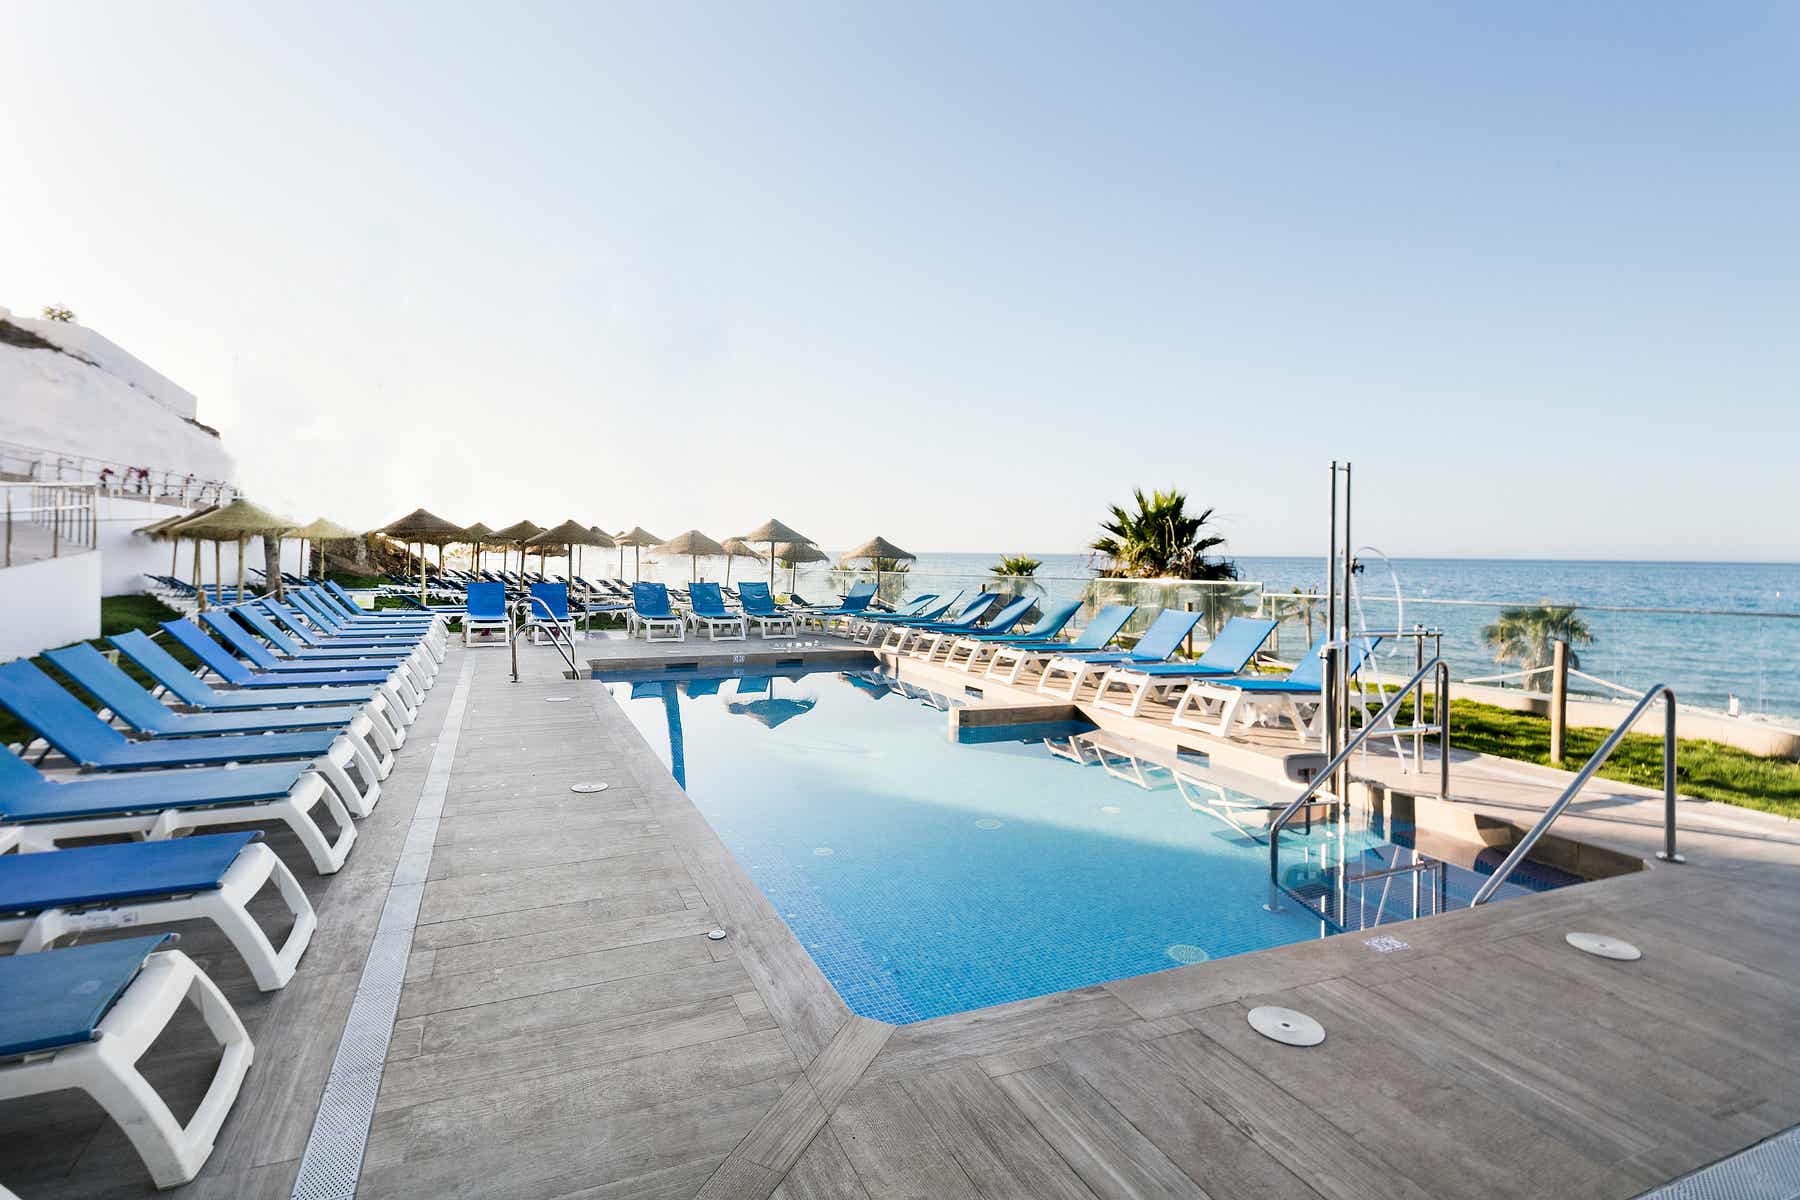 Cheap Holidays to Benalmadena - 4 Star Best Benalmadena Hotel - Costa del Sol 2